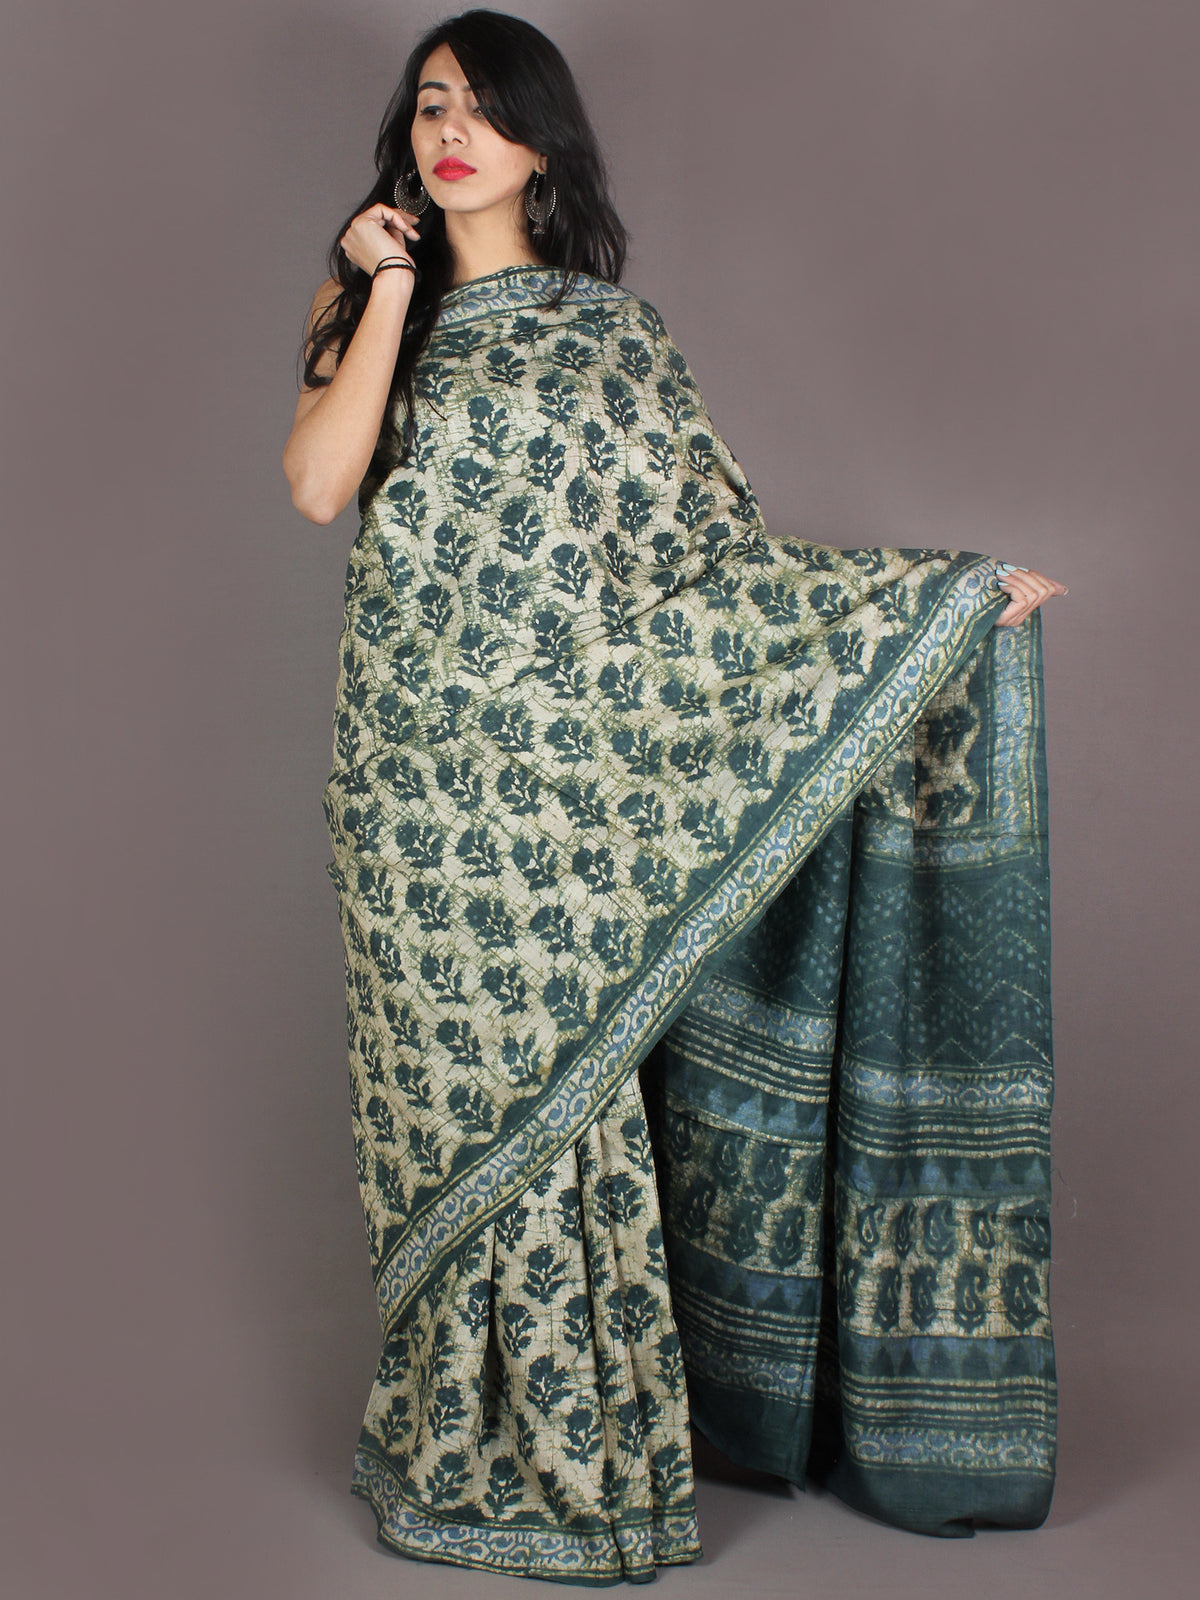 Tussar Handloom Silk Hand Block Printed Saree in Pine Green & Ivory - S03170954